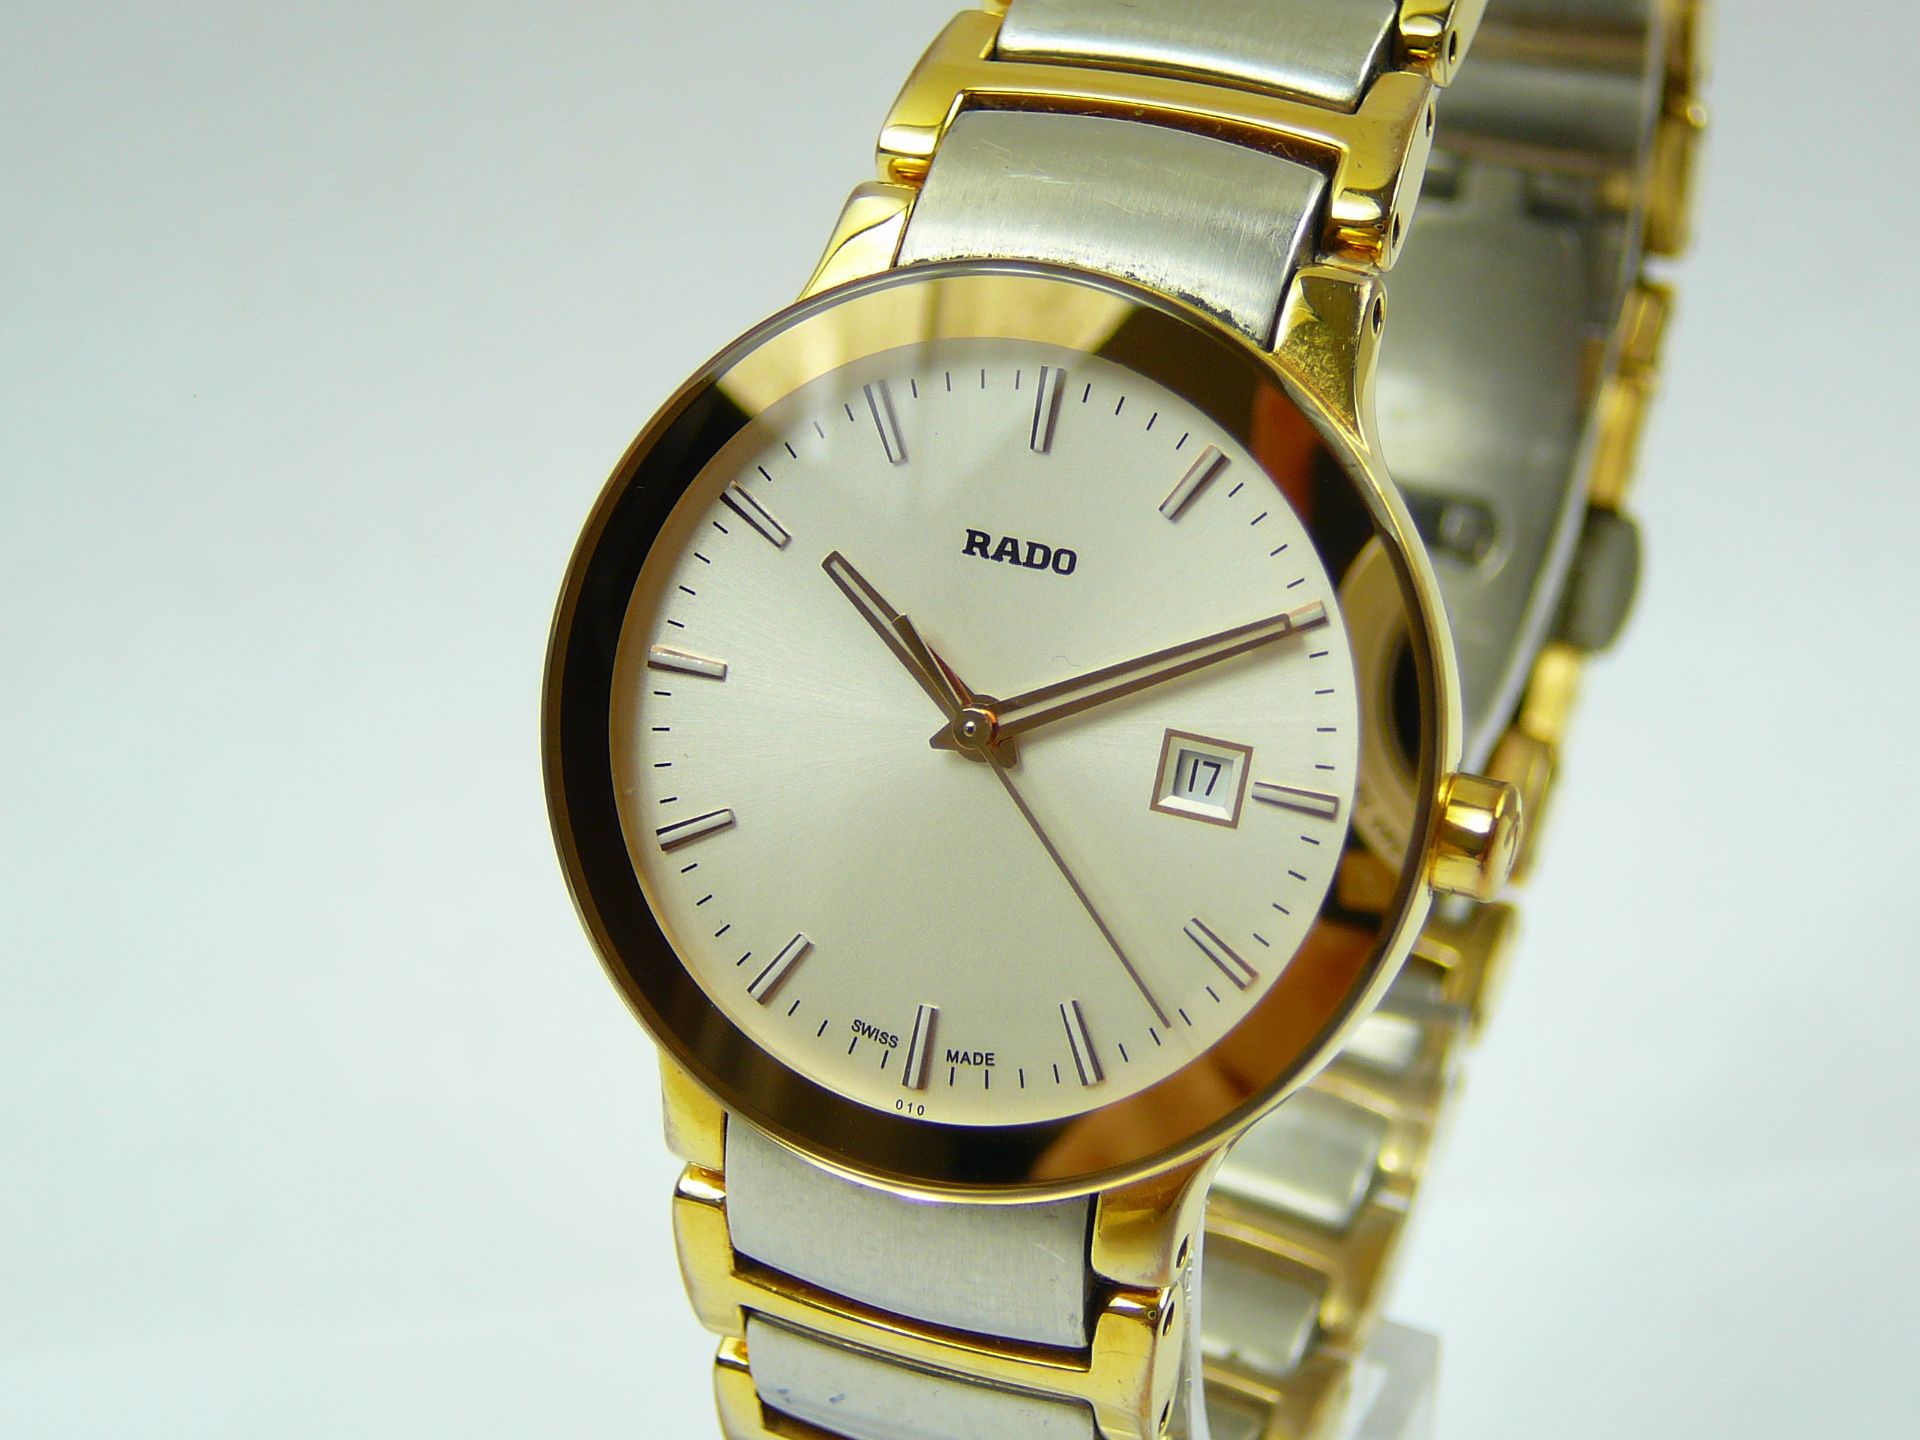 Ladies Rado Wrist Watch - Image 2 of 3